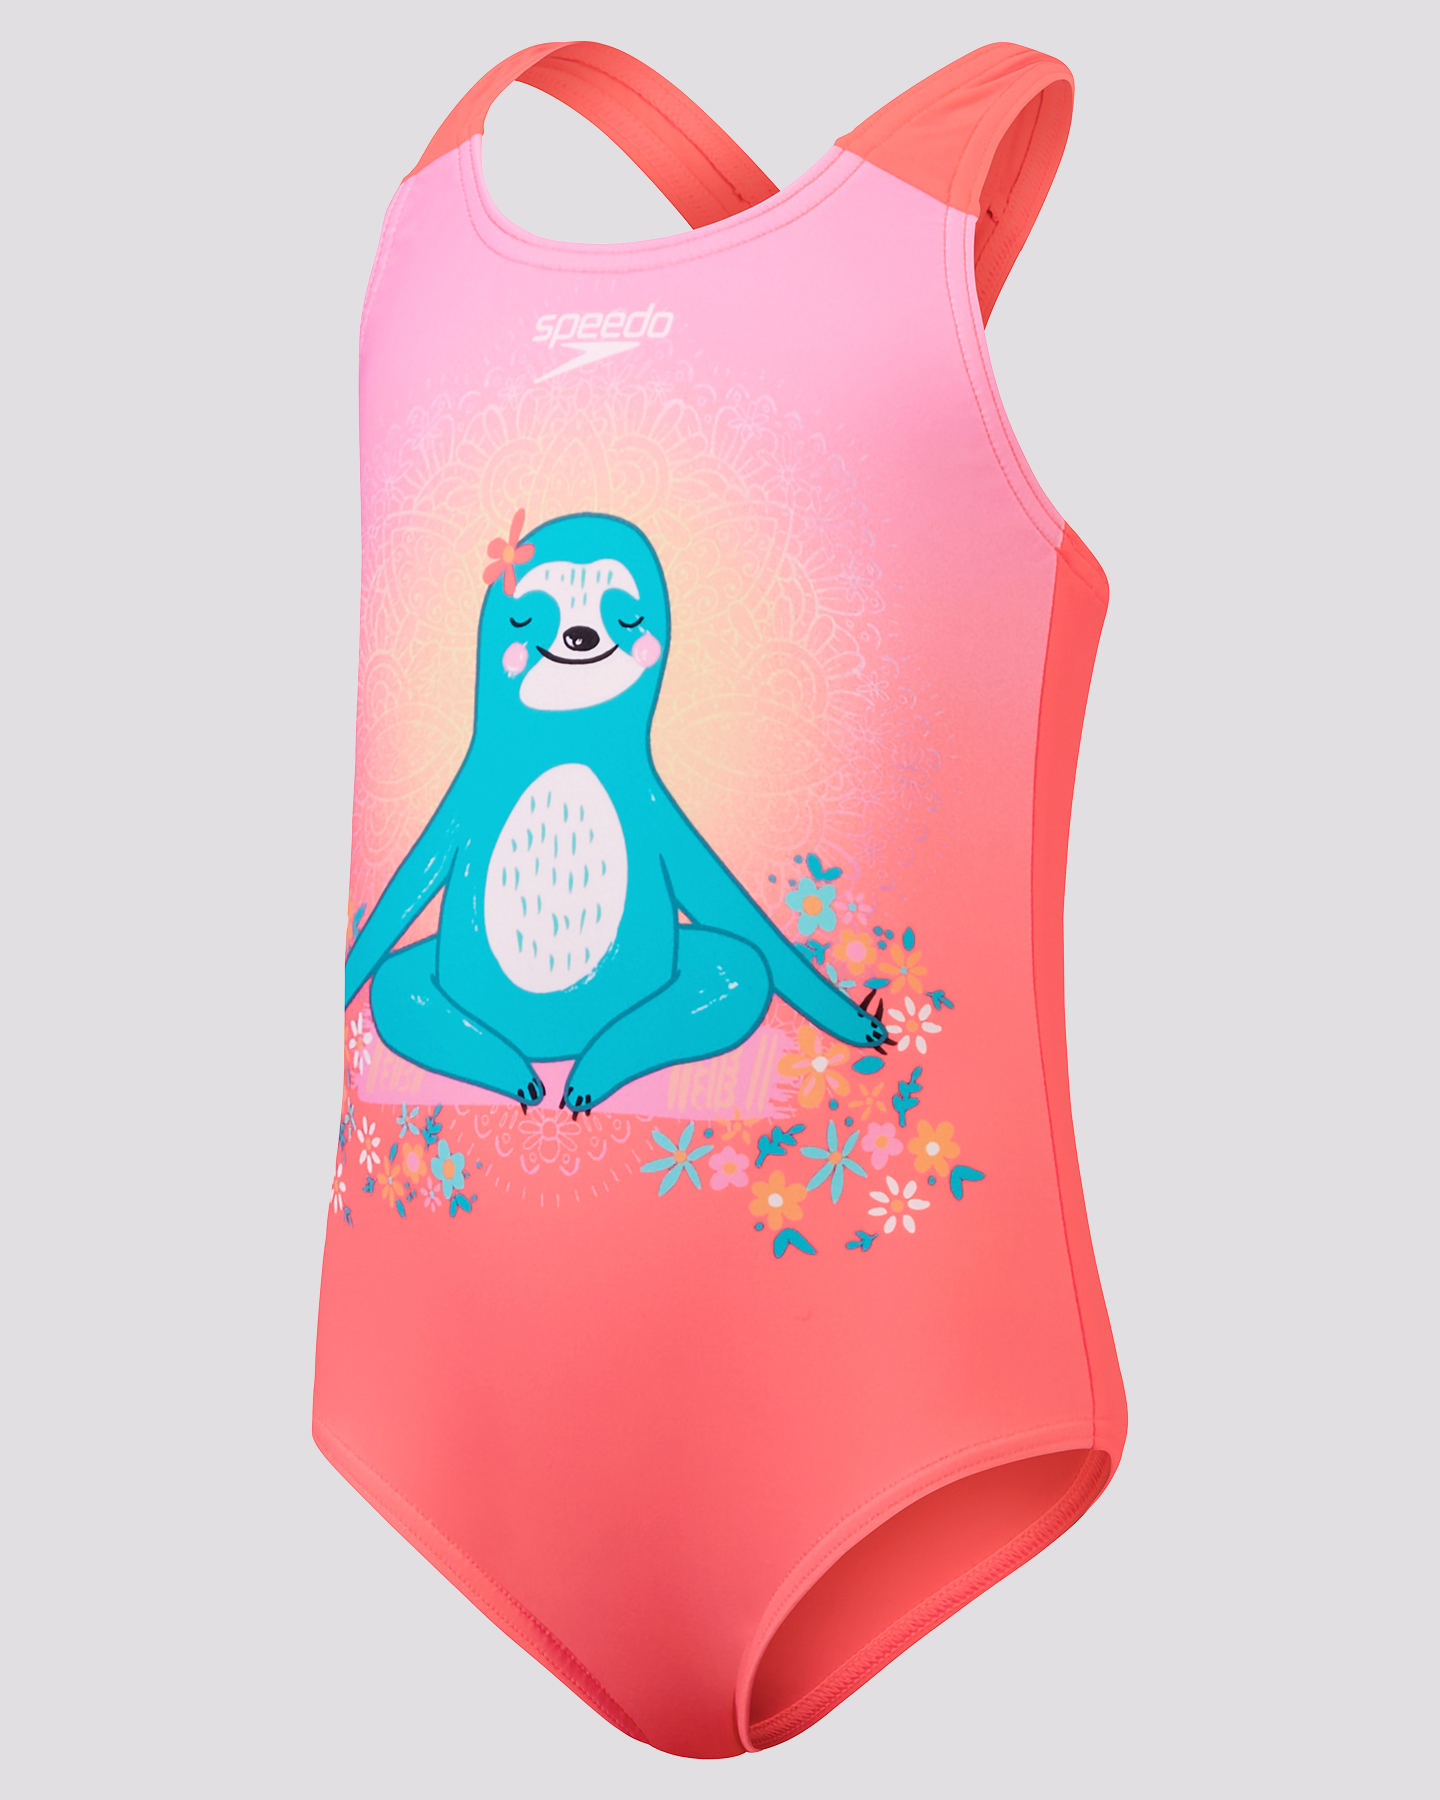 Speedo Women’s Coral Design One Piece Bathing Suit / Size 6